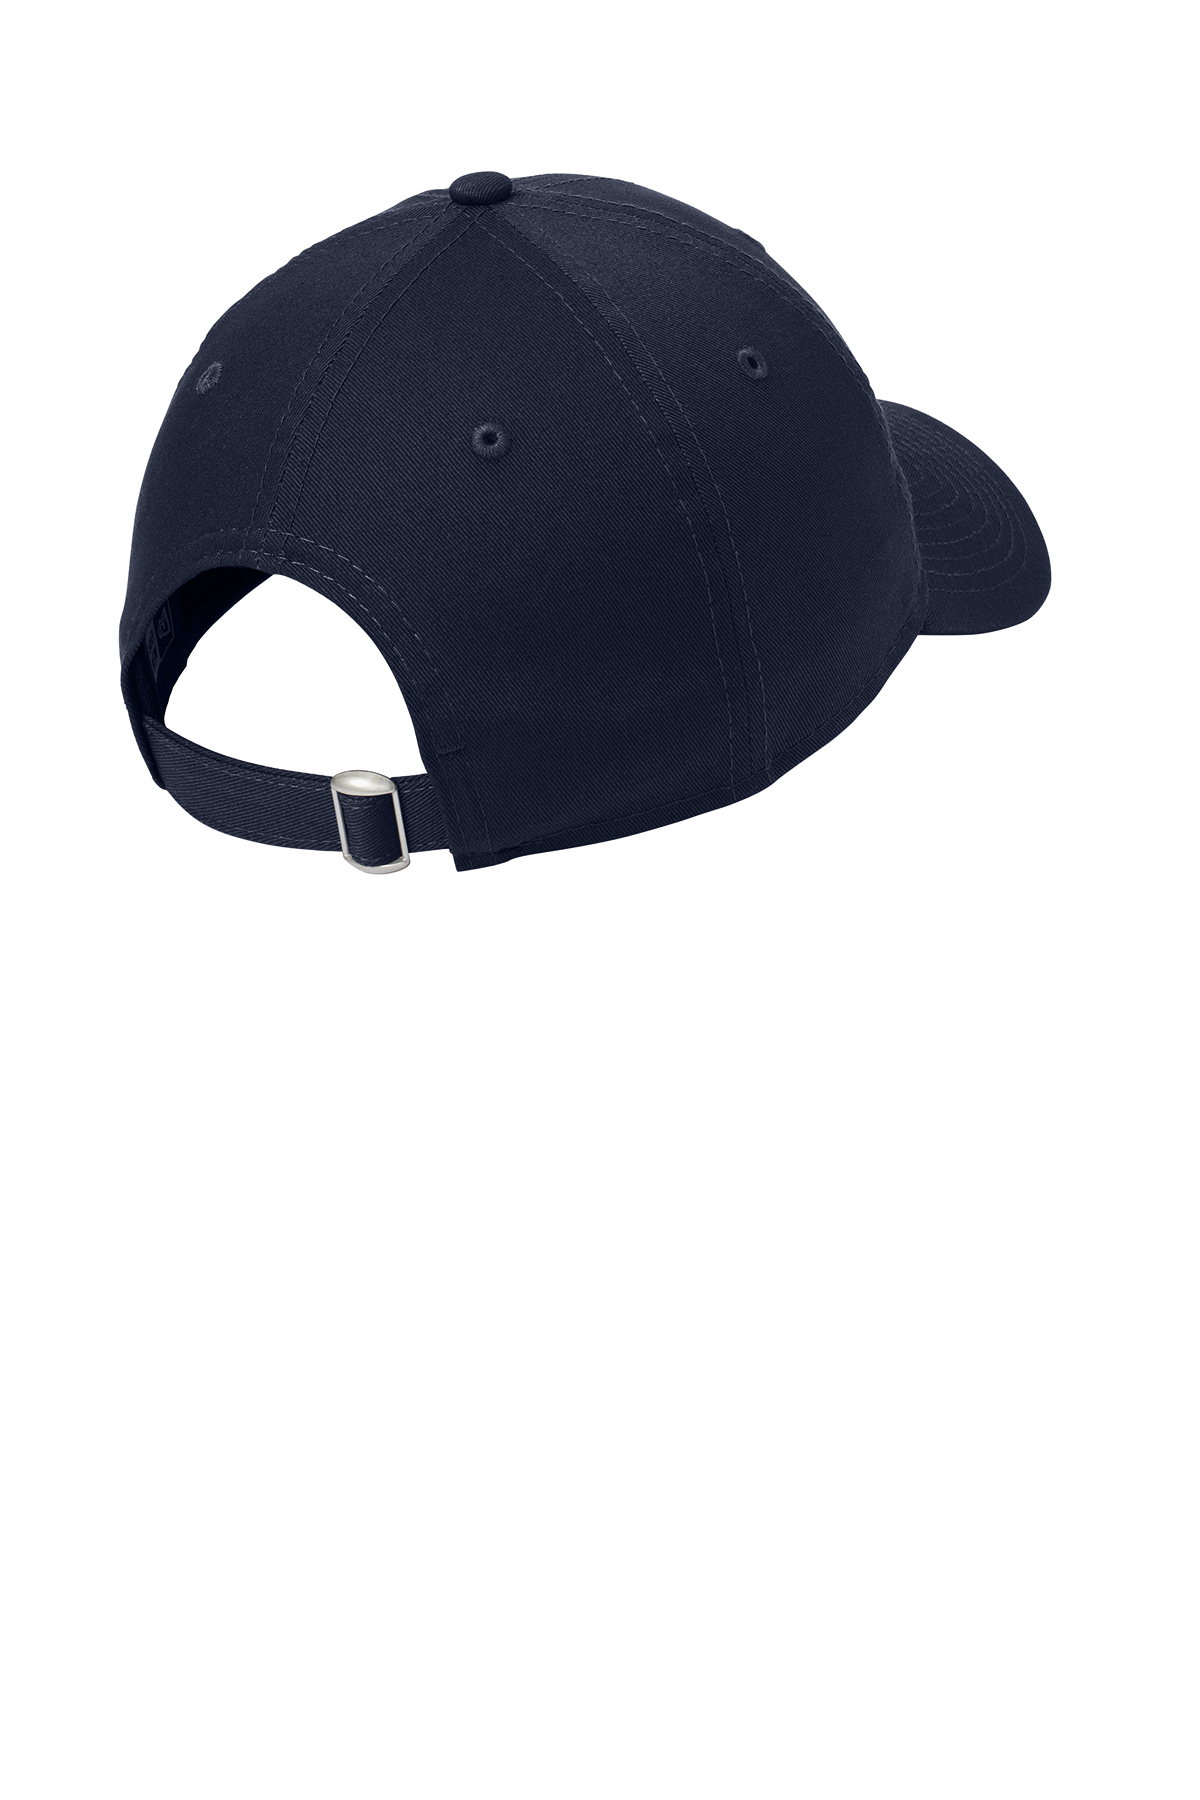 New Era 9TWENTY Black Adjustable Unstructured Cap - Sample